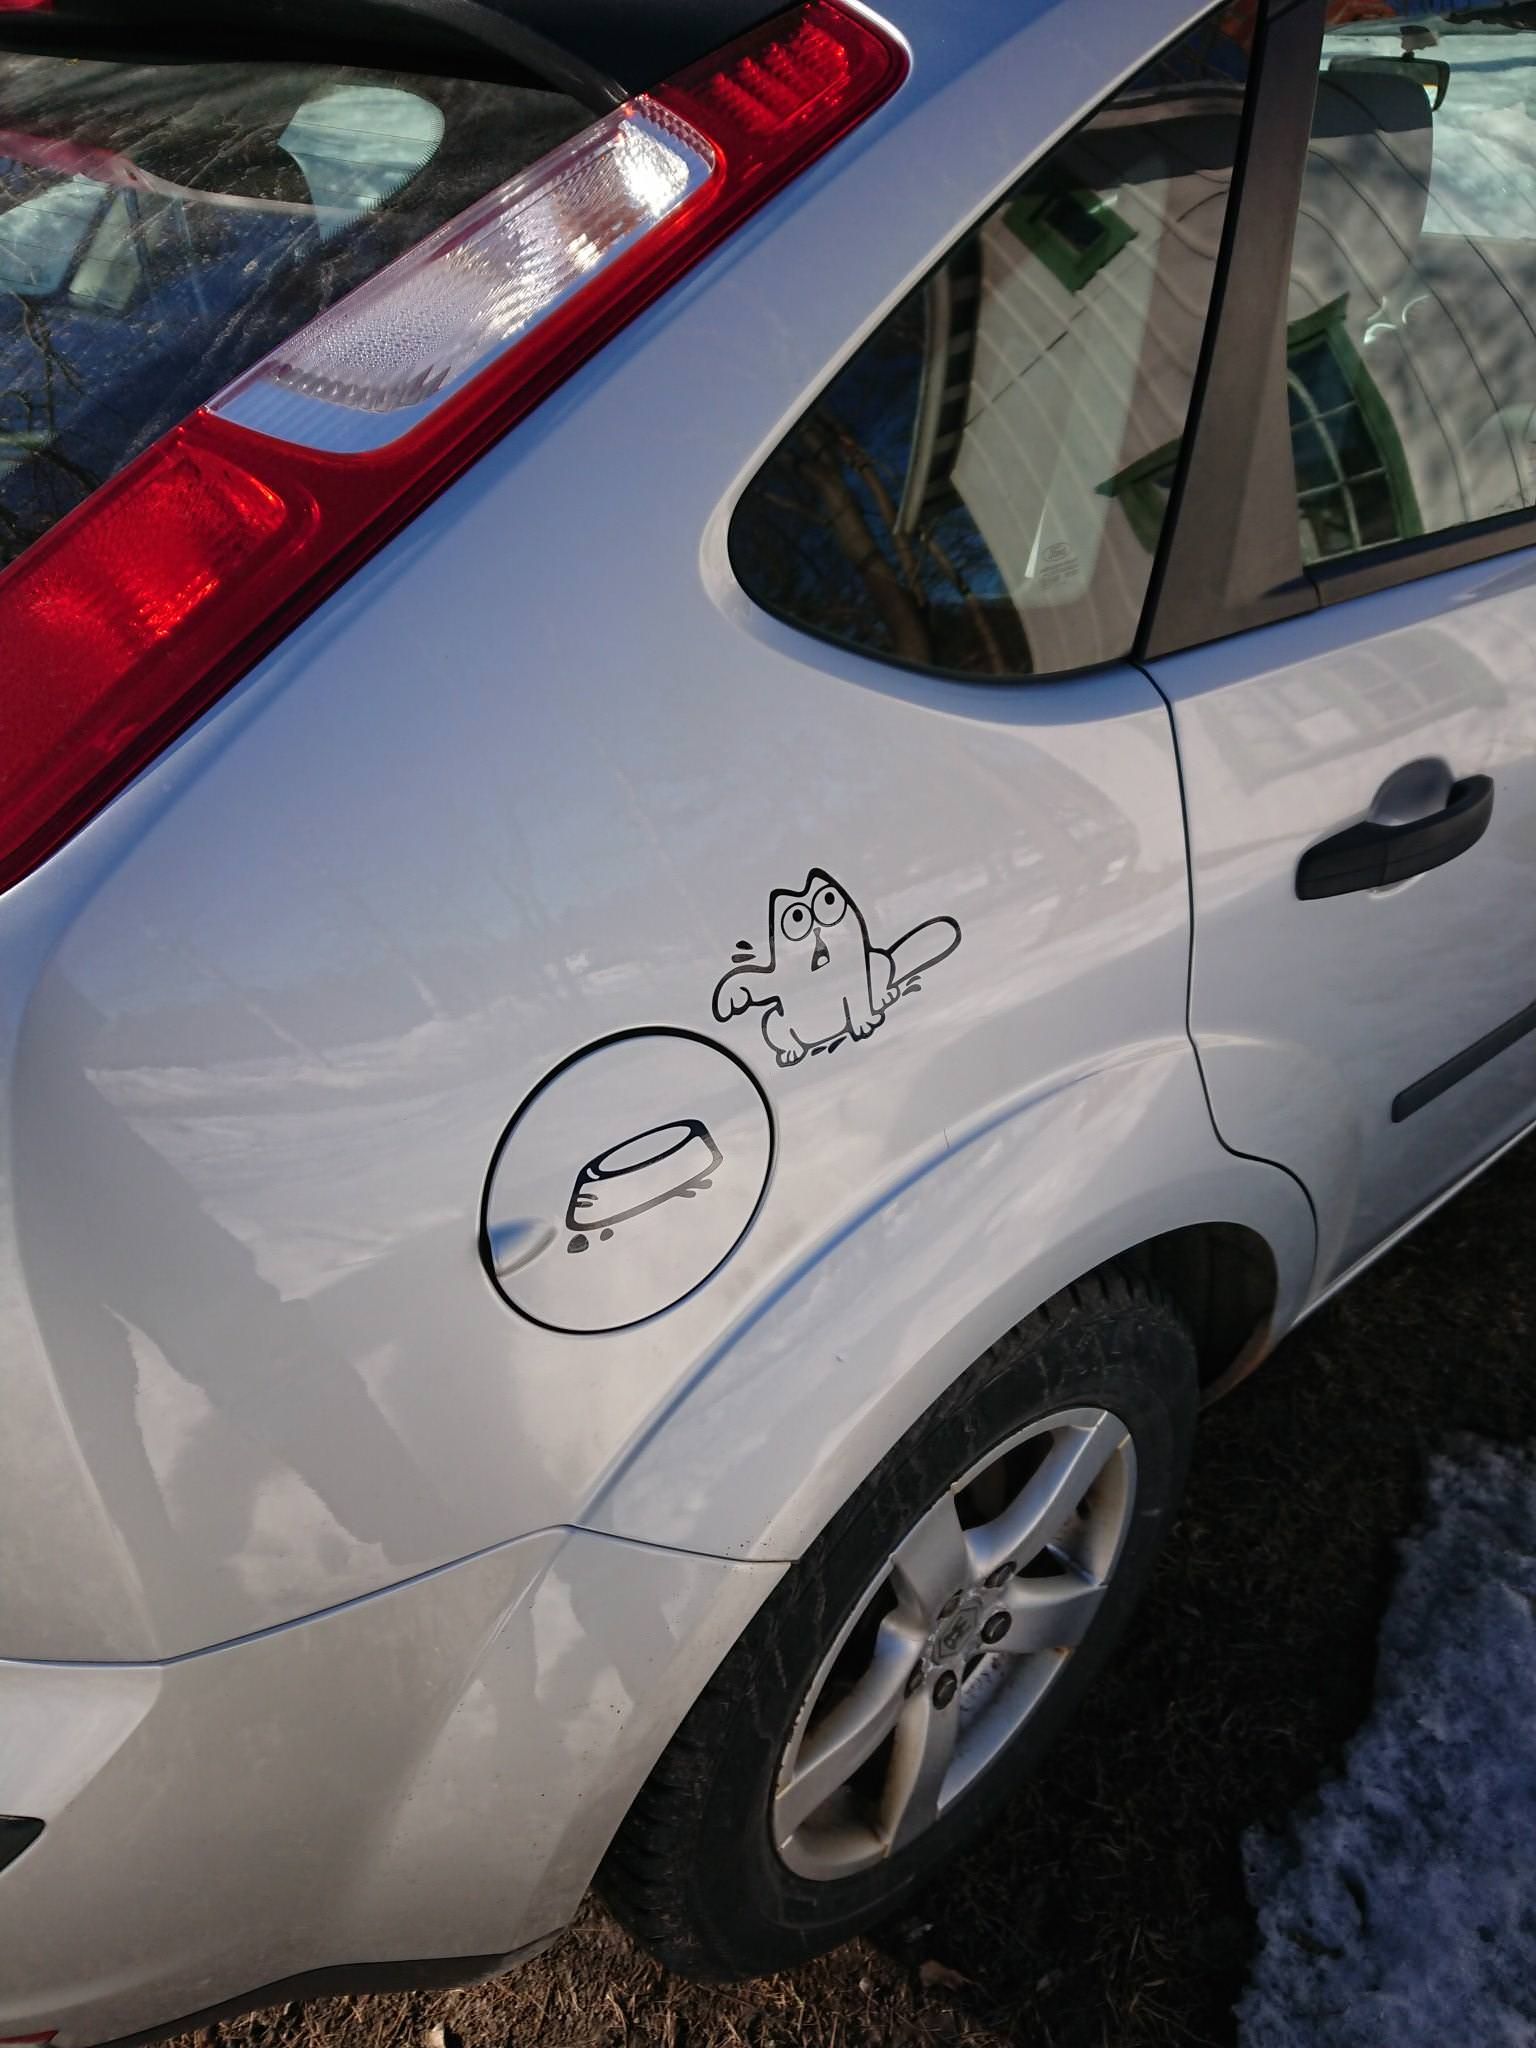 I got a new sticker for my car